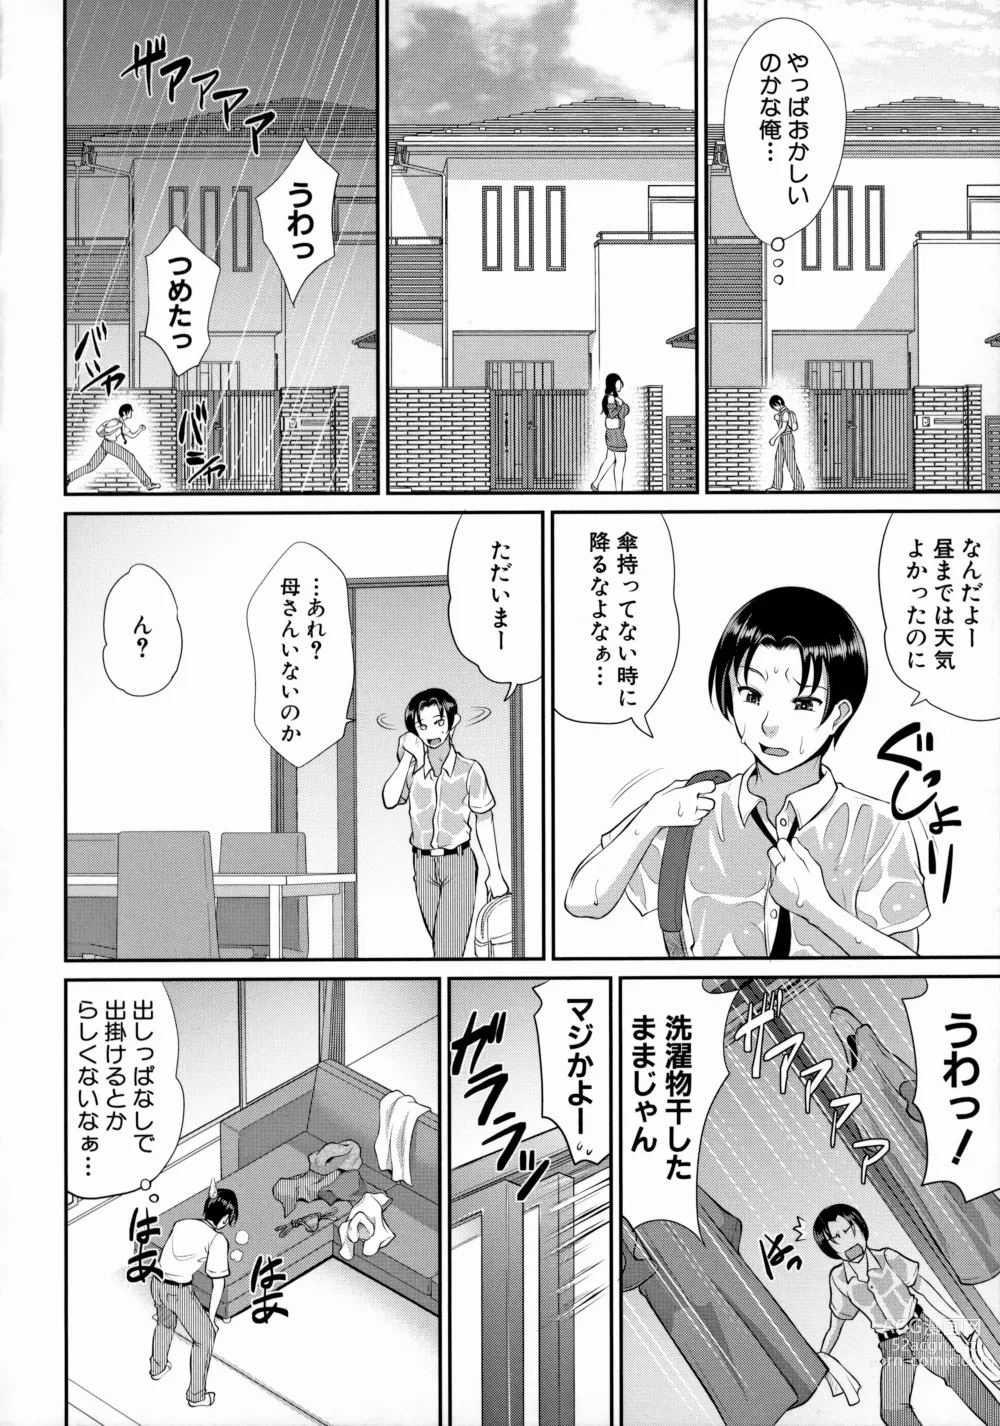 Page 6 of manga Uruwashi no Wife